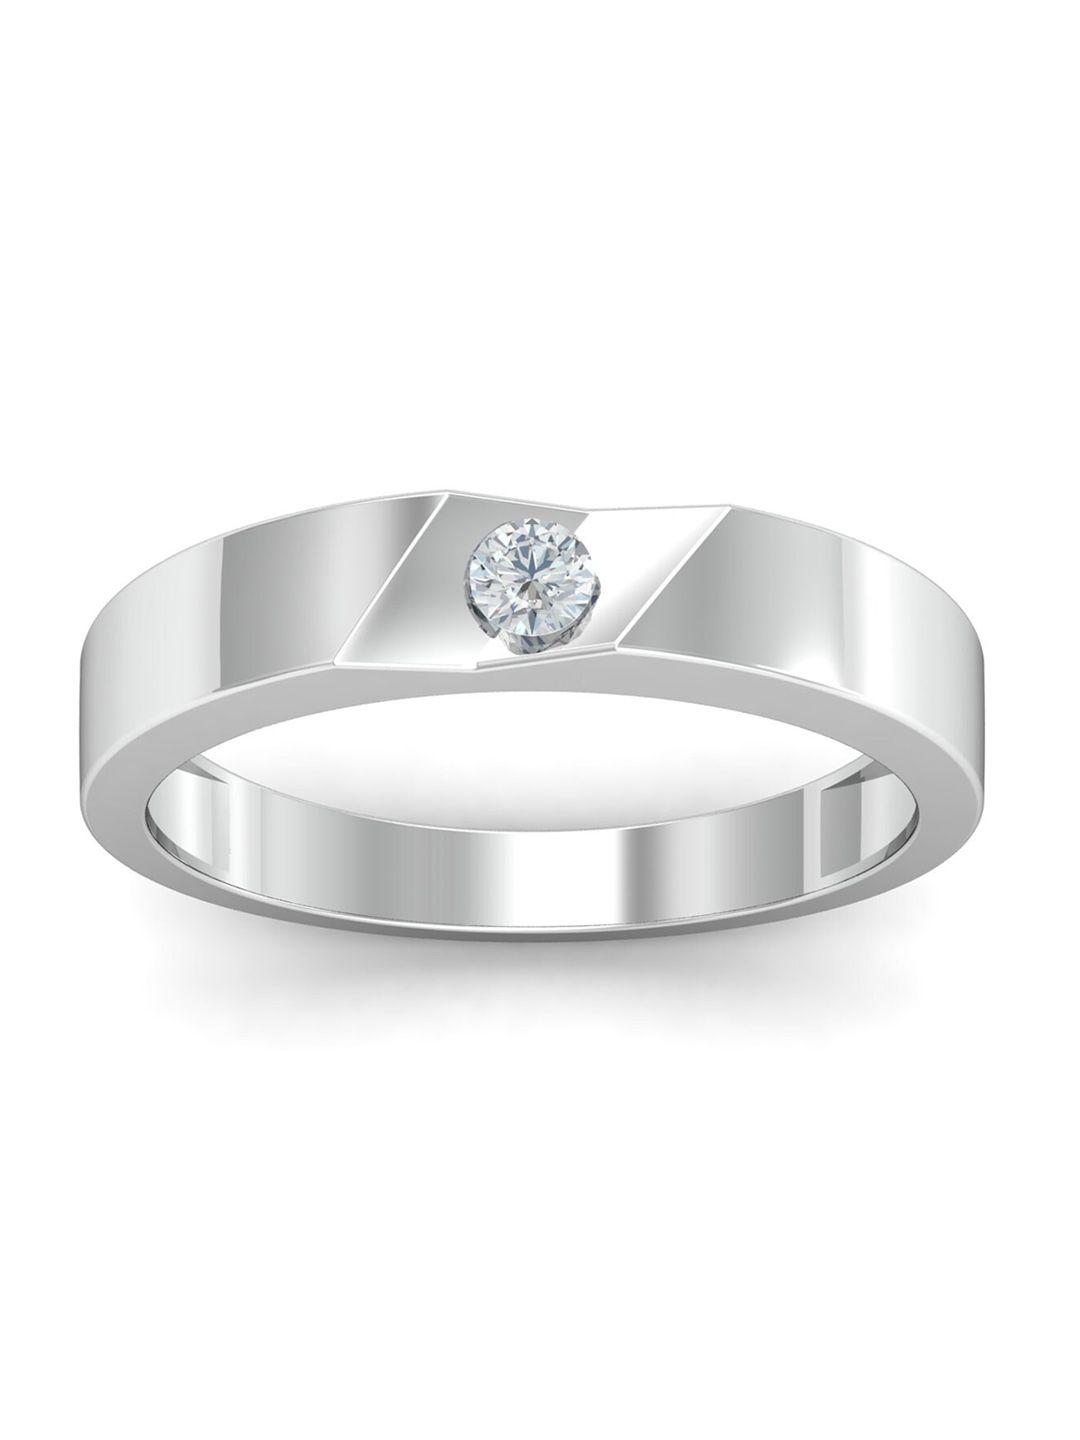 kuberbox love wedding band men 18kt white gold diamond-studded ring- 4.05 gm